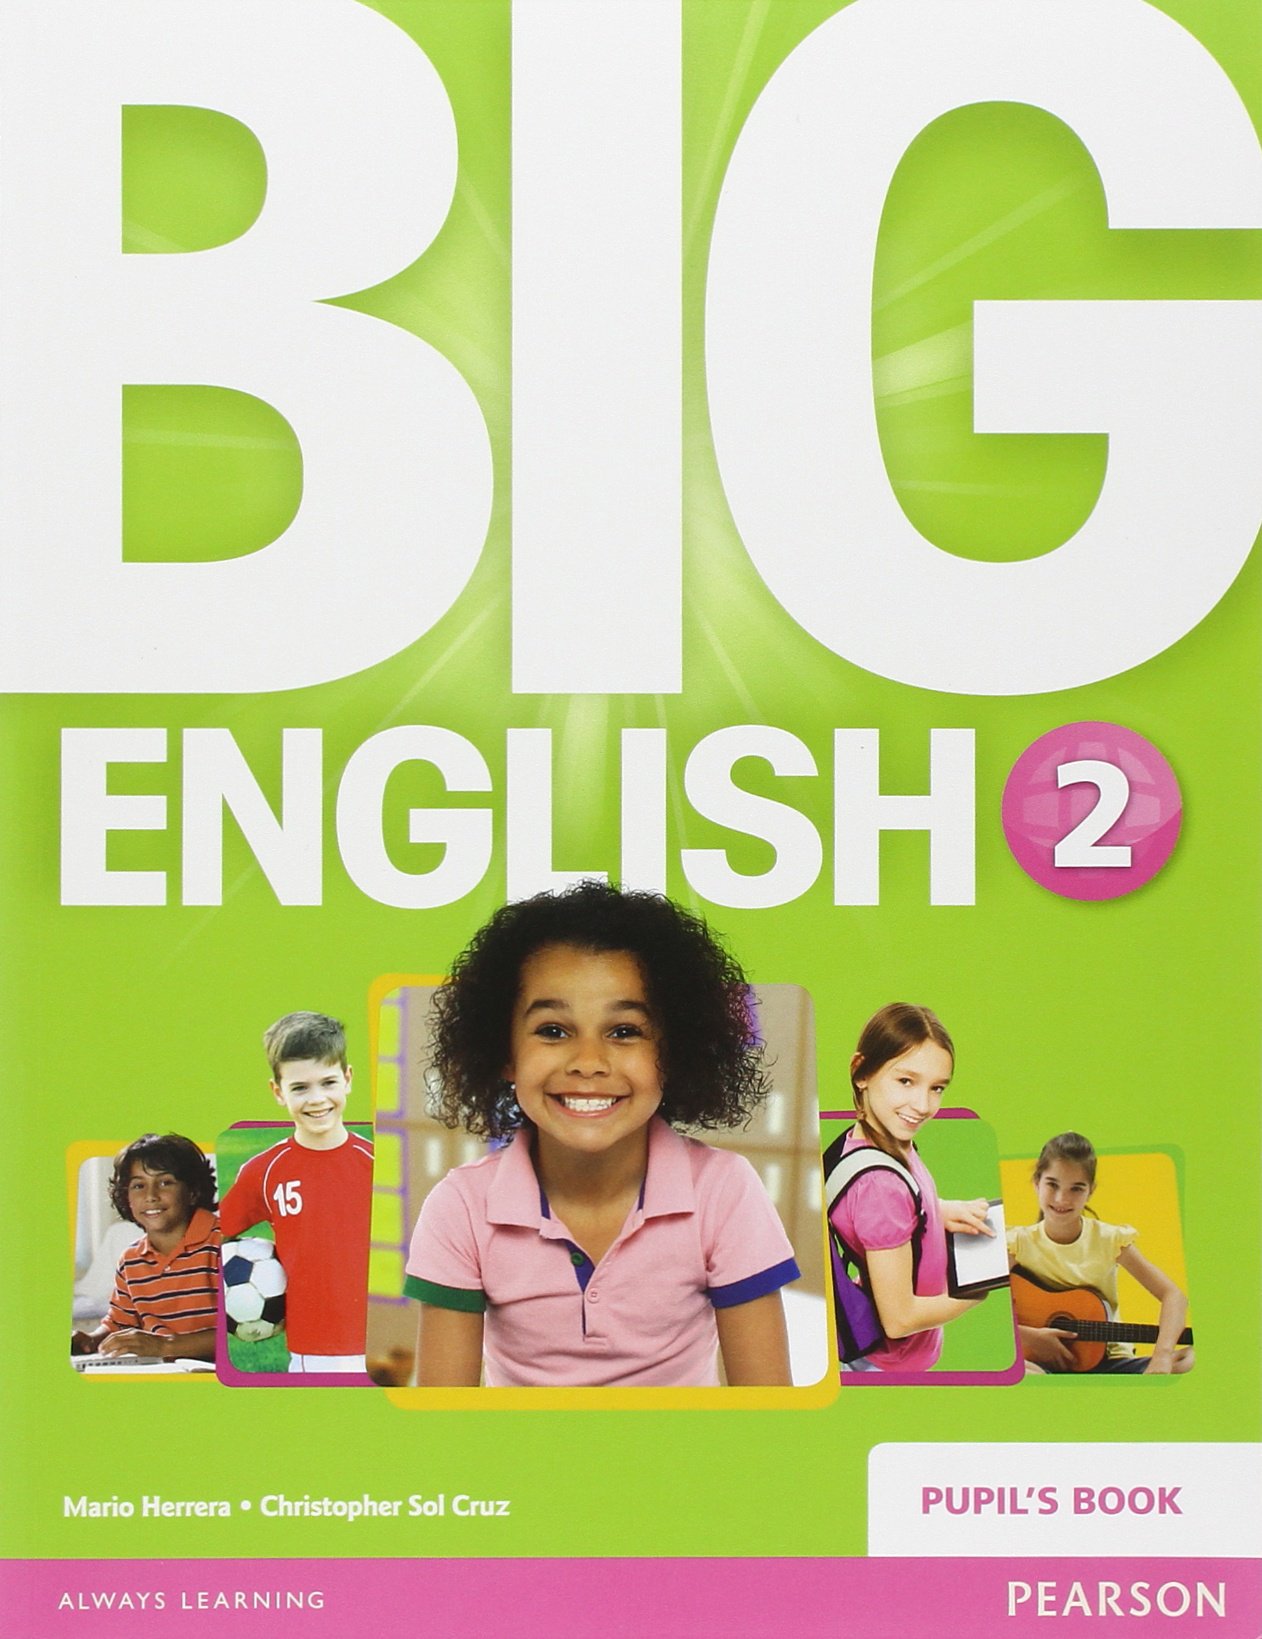 BIG ENGLISH 2 Pupil's Book